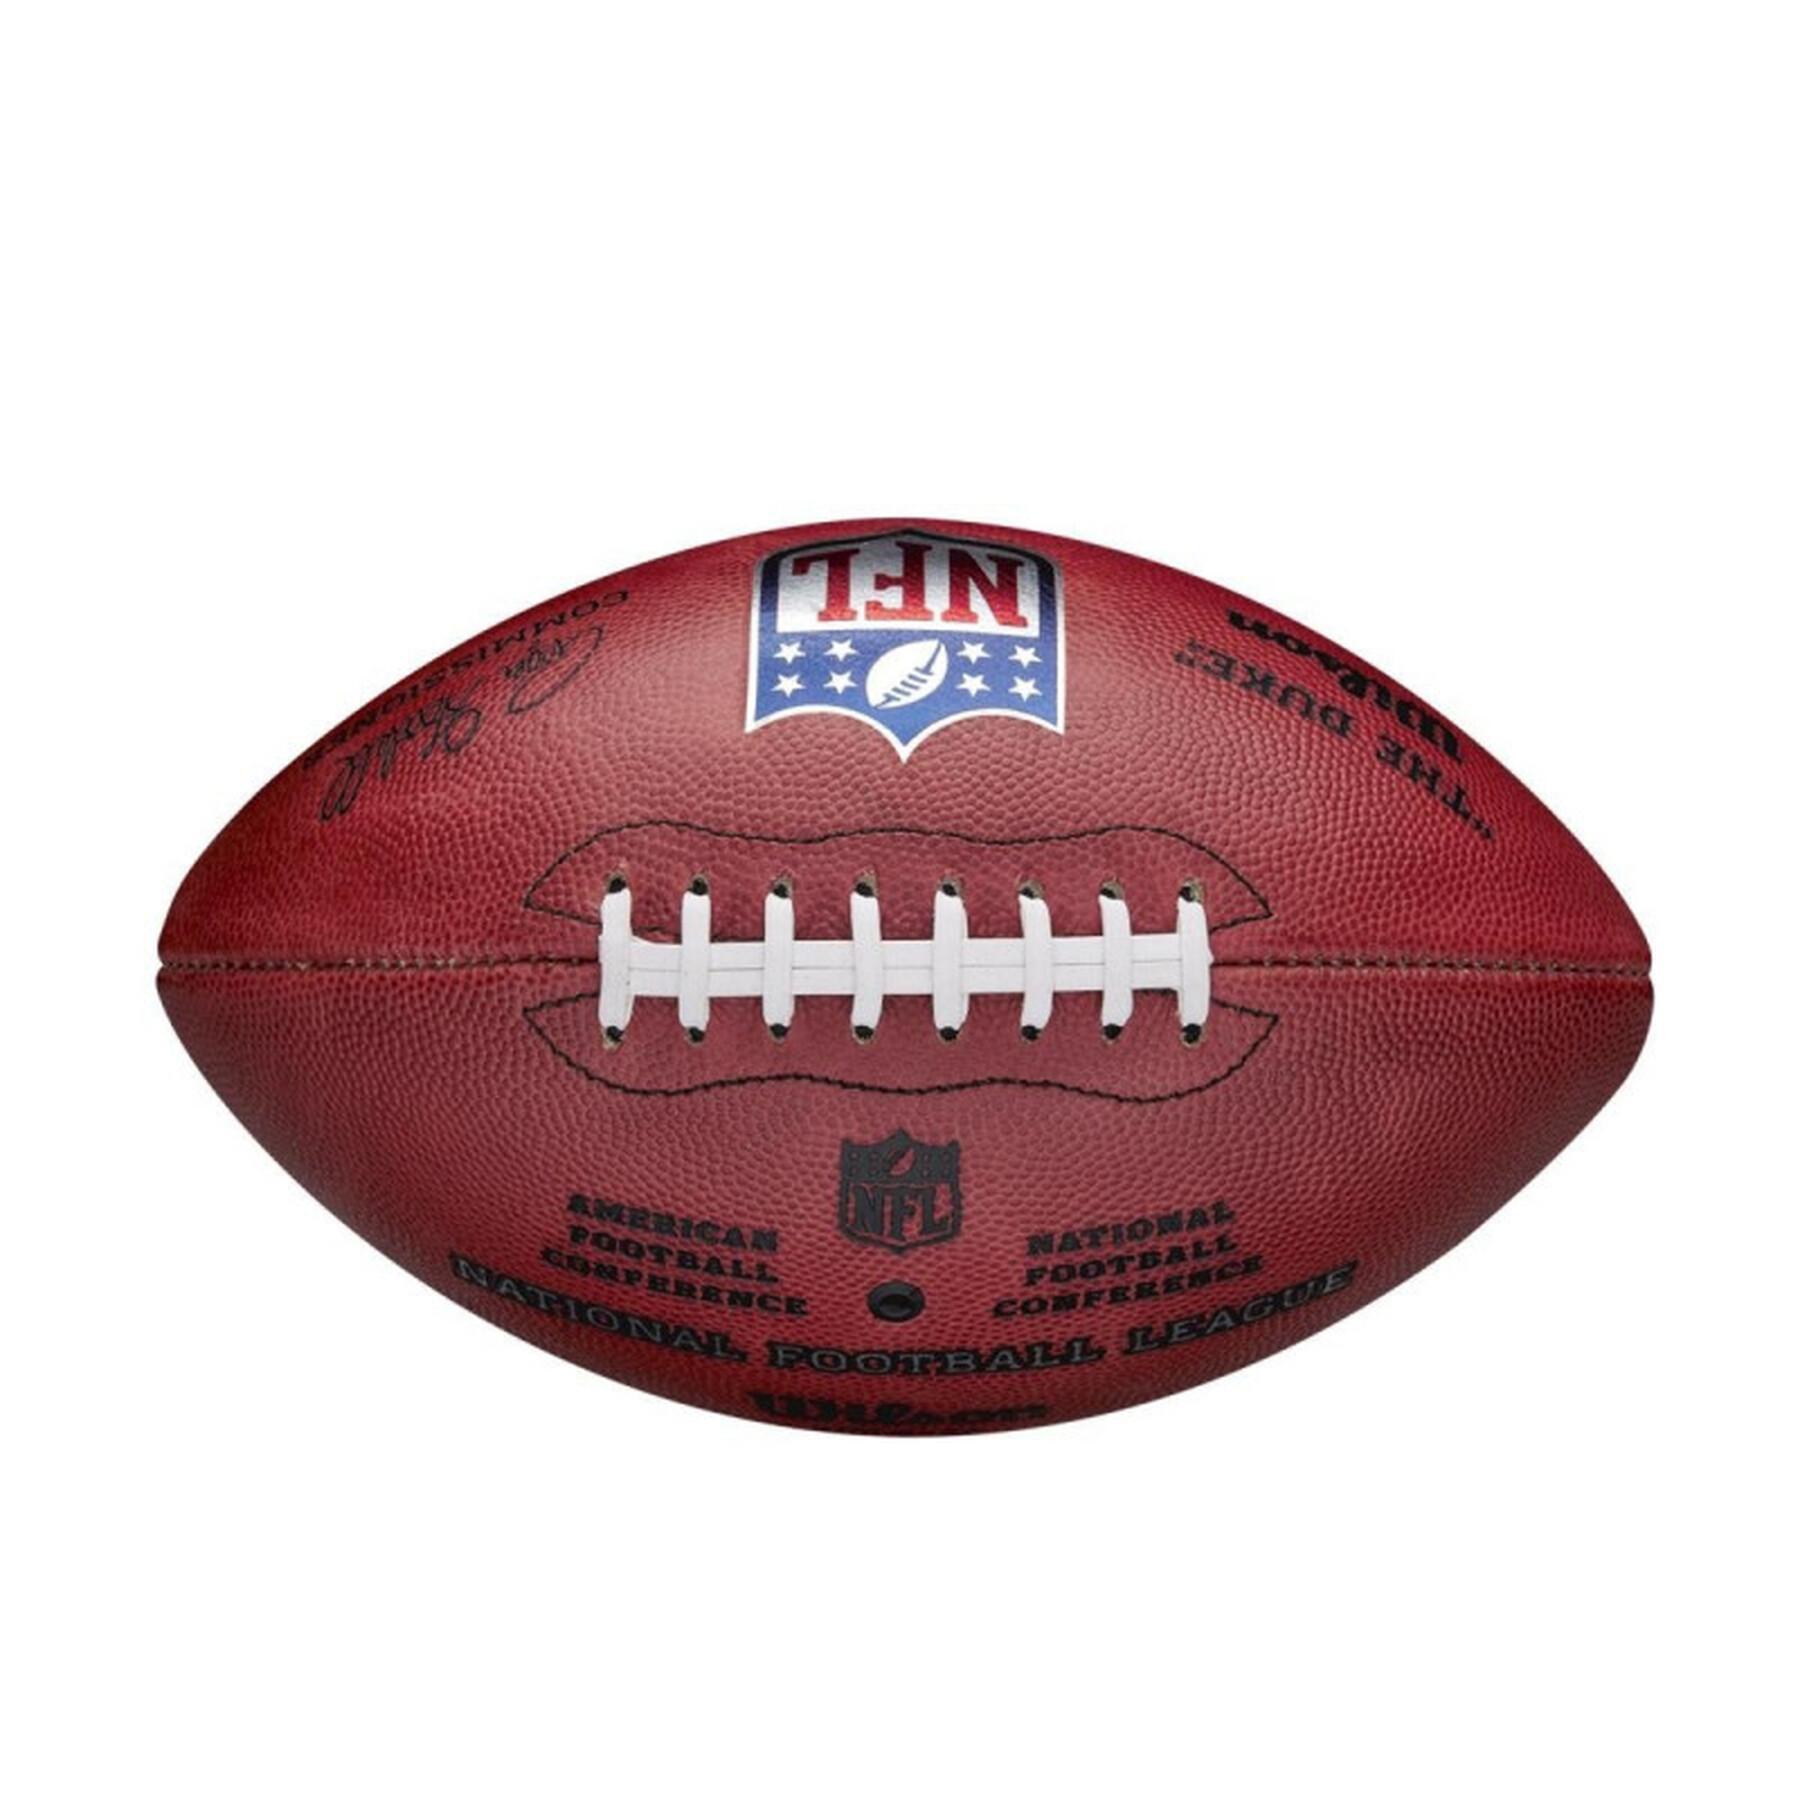 Ny boll NFL DUKE Game Ball